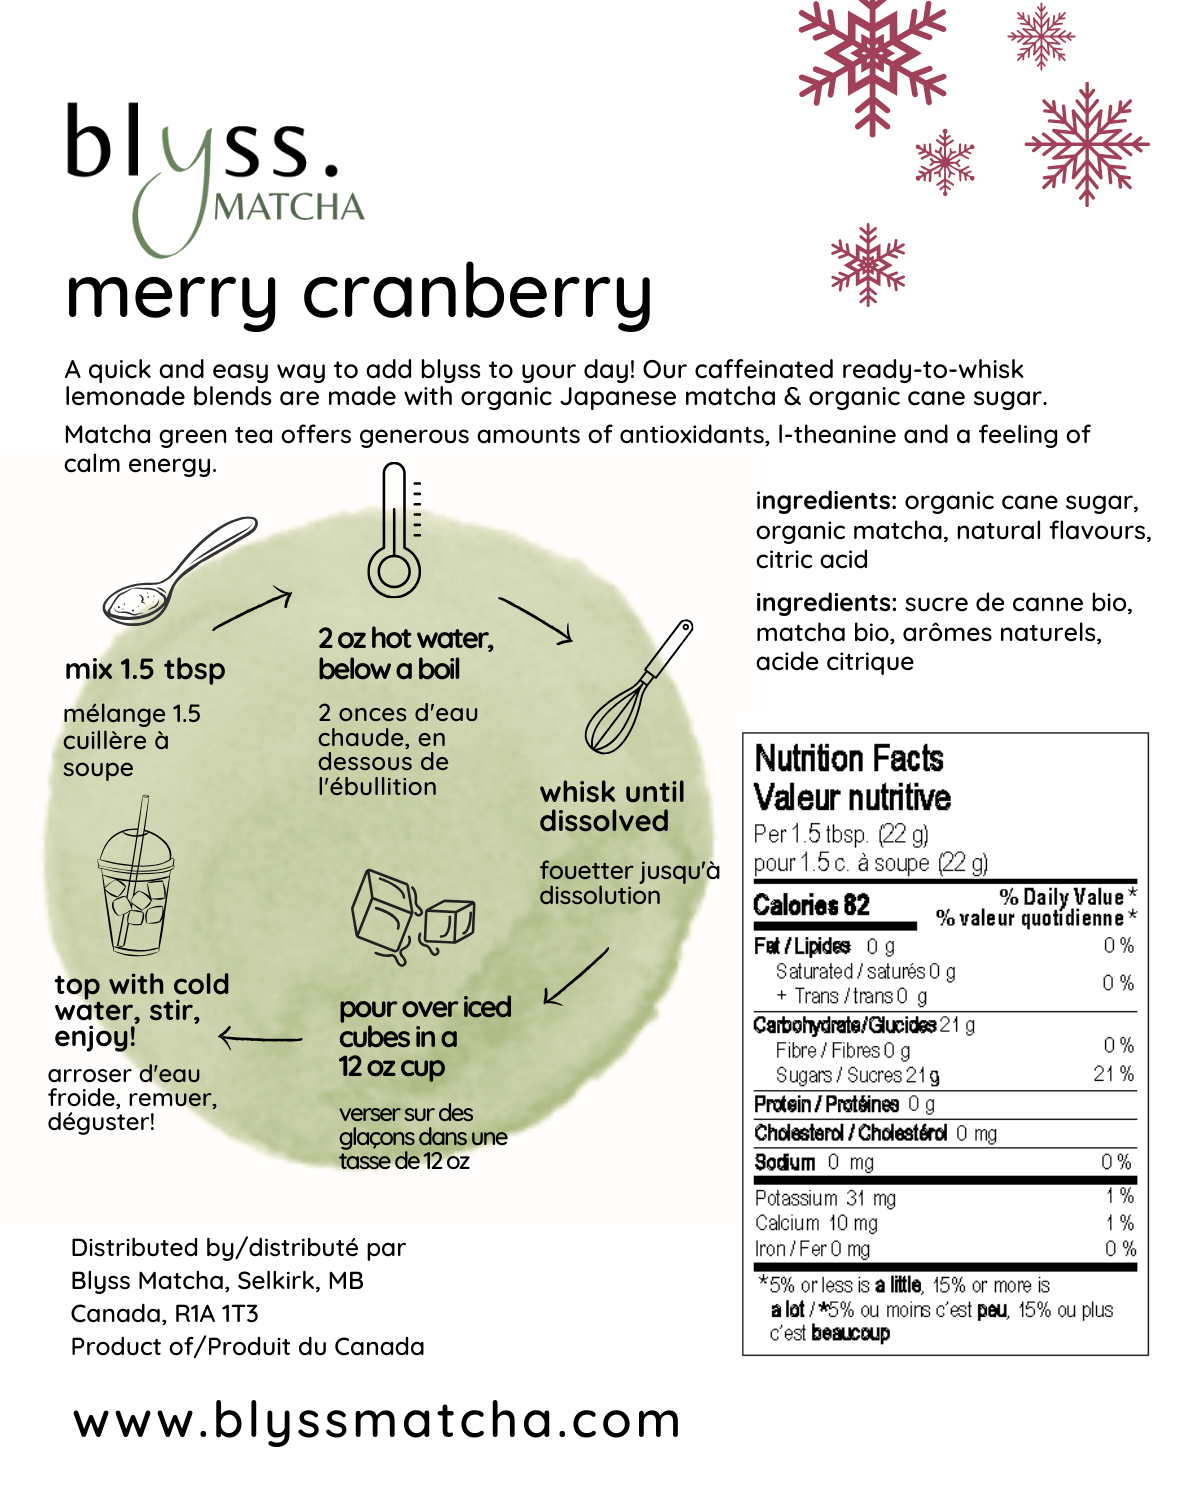 Merry Cranberry